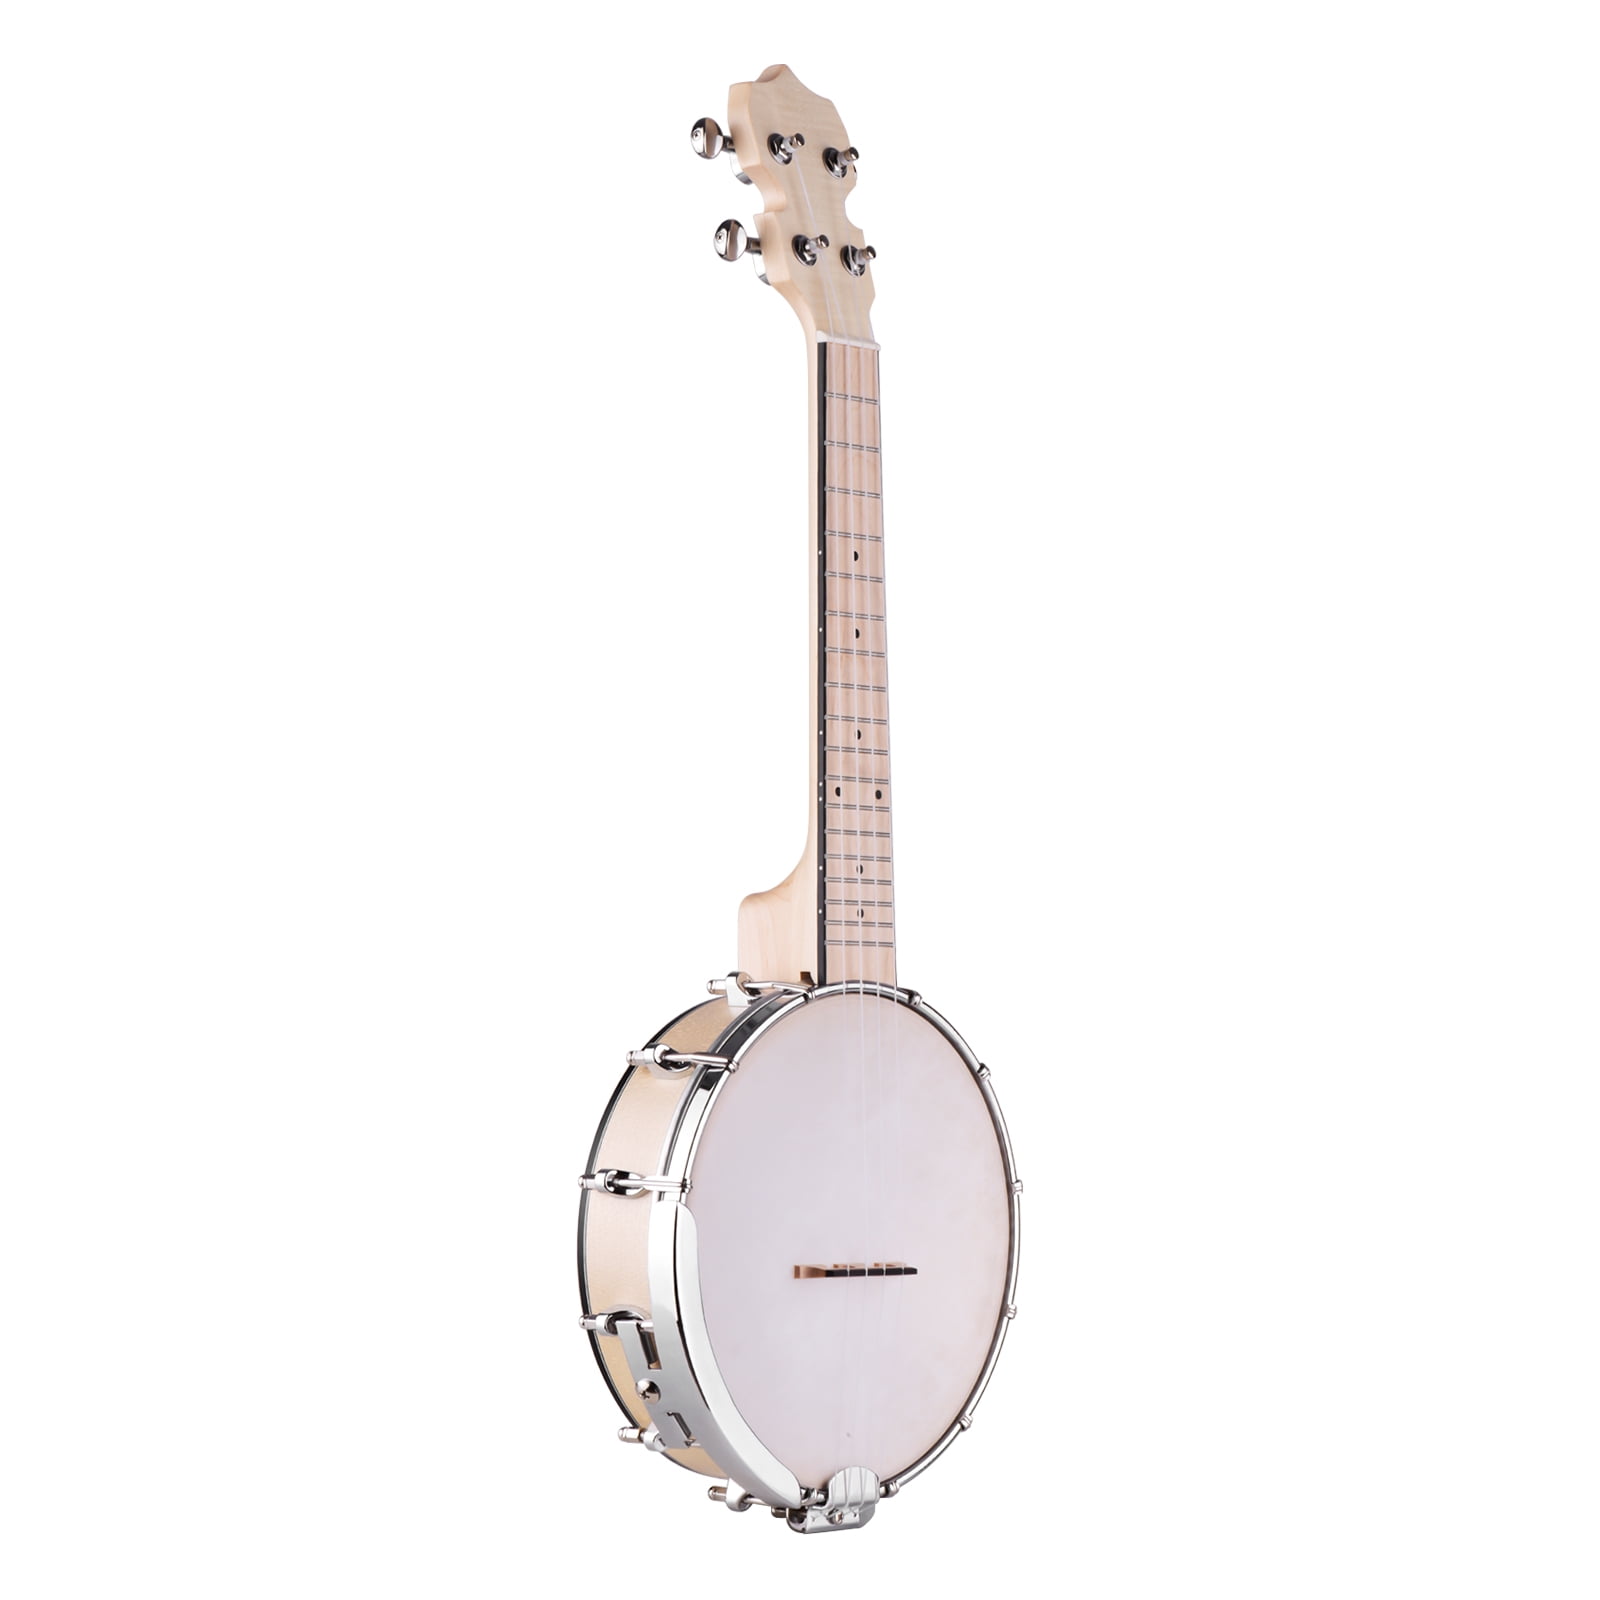 Miniature BANJO PIN Musical Instrument Replica Superb Detail 2.5" Long 